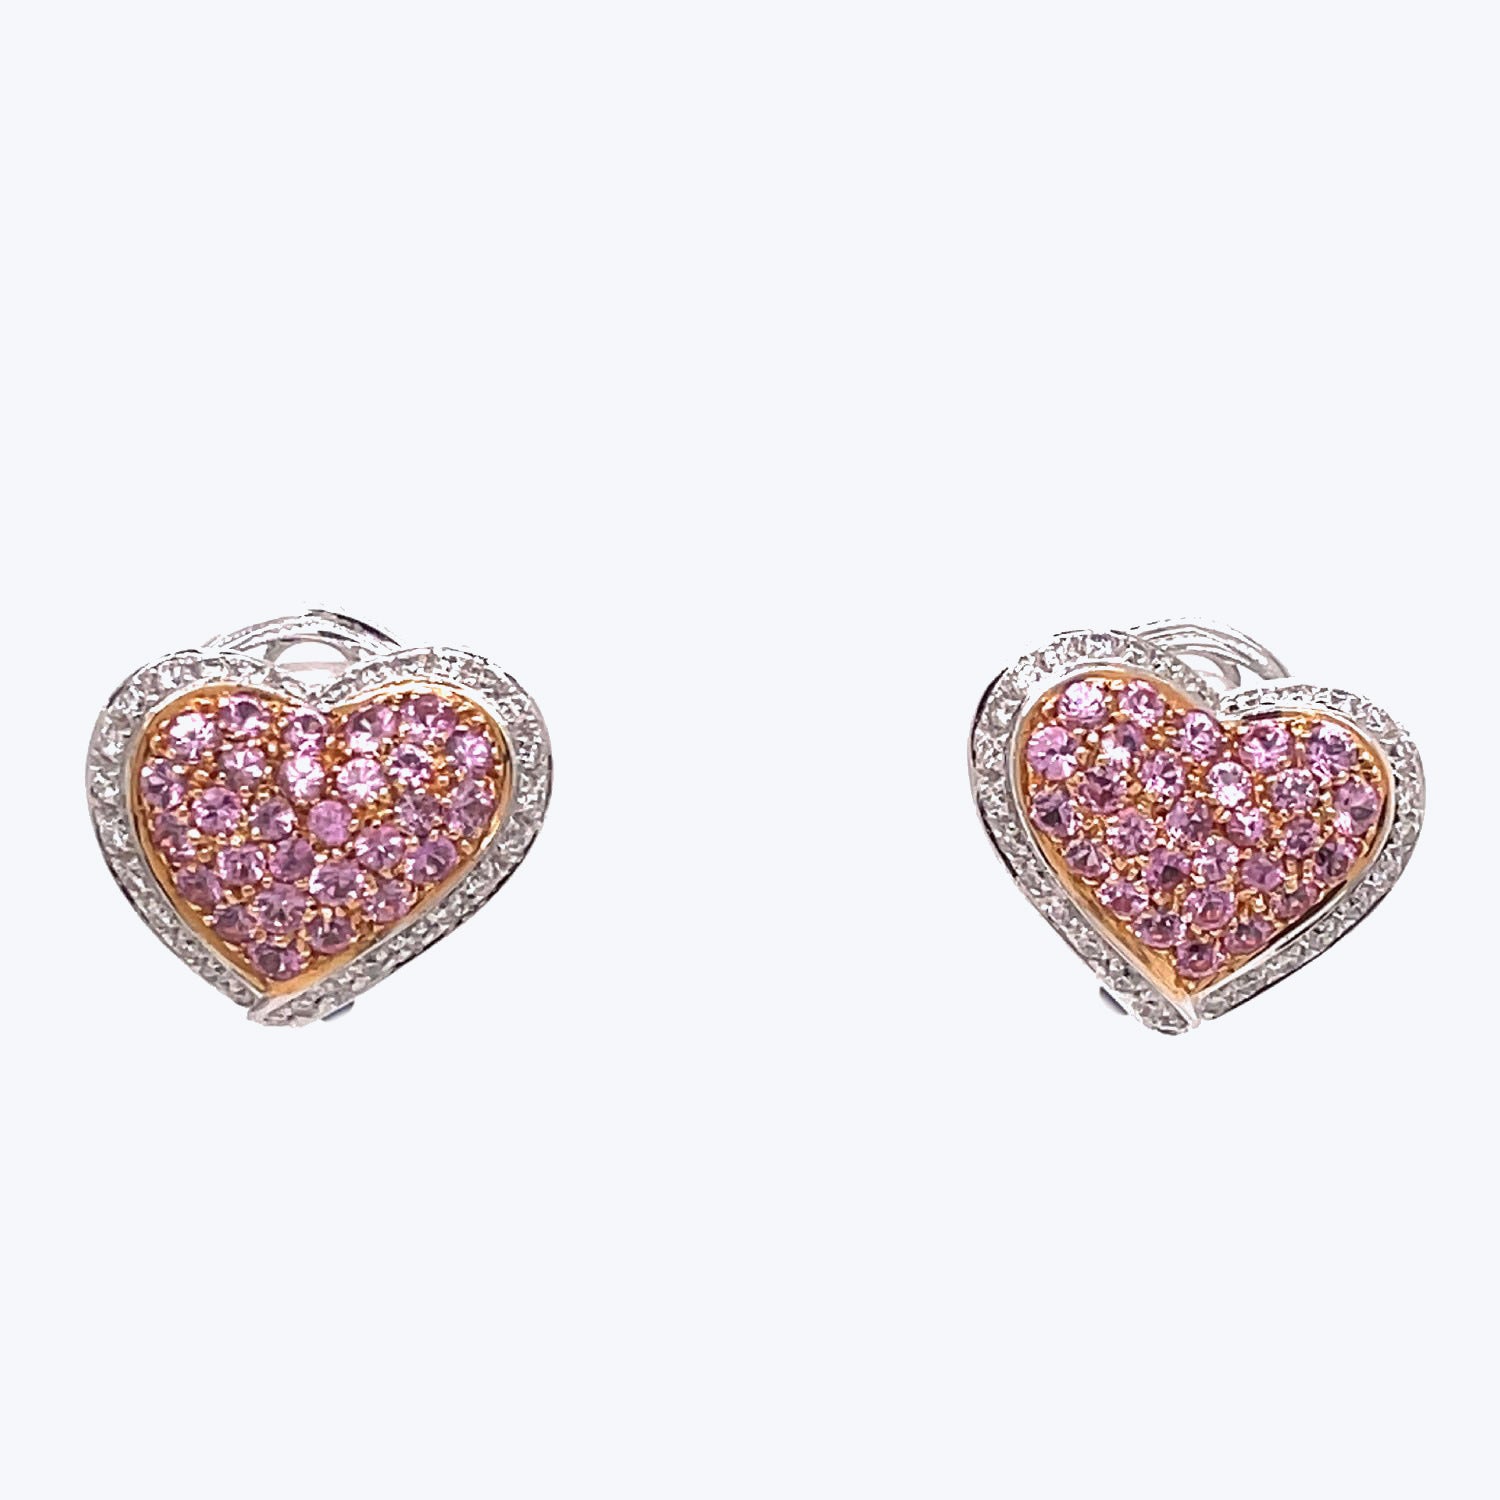 Radiant heart-shaped earrings adorned with sparkling gemstones for elegance.